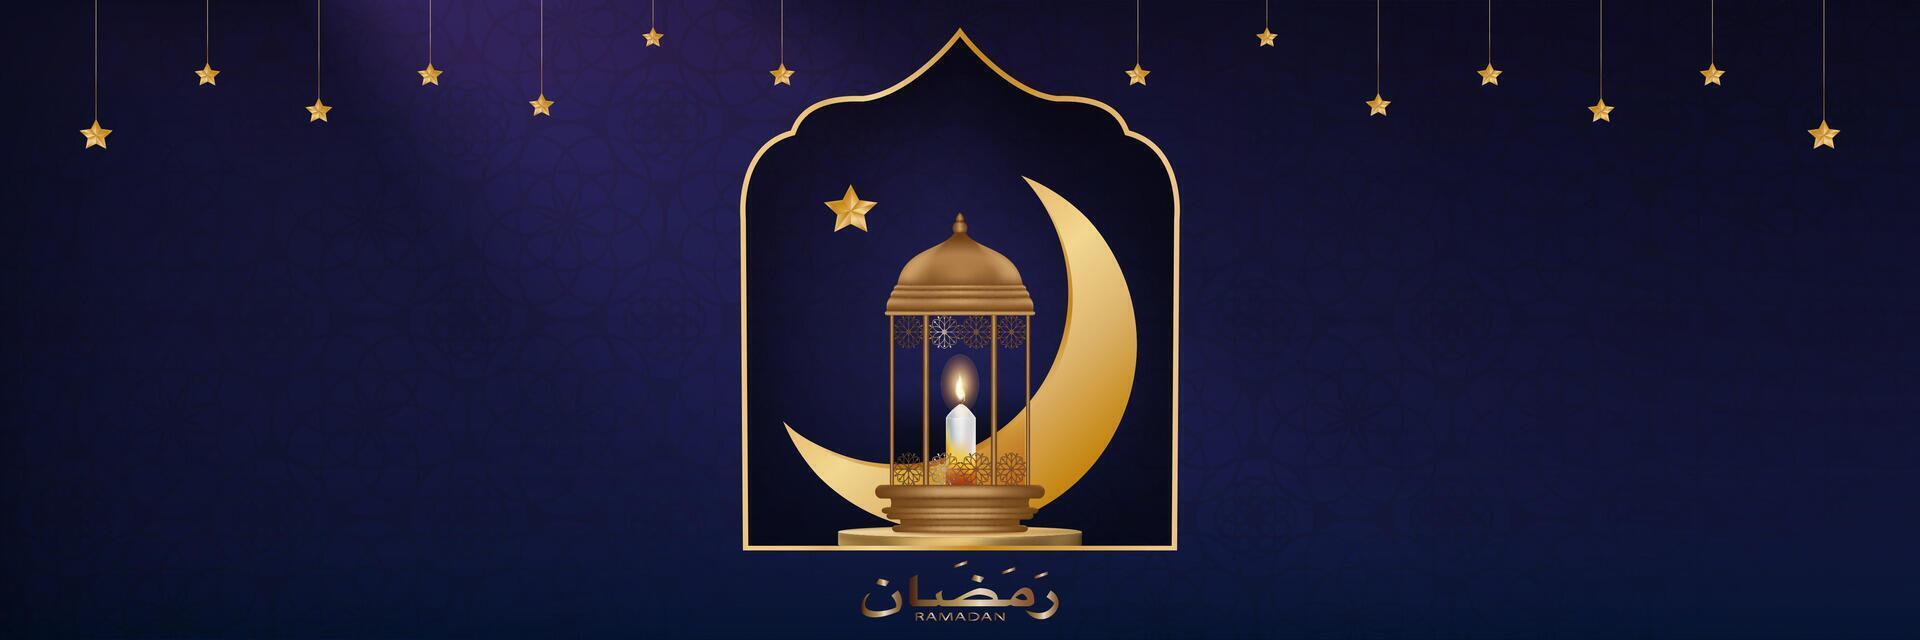 Ramadan mubarak fond,islamique lanterne sur podium avec croissant lune, étoile sur bleu toile de fond.vecteur religion de musulman symbolique, aïd Al Fitr, Ramadan kareem, aïd Al adha, ramadan kareem vecteur